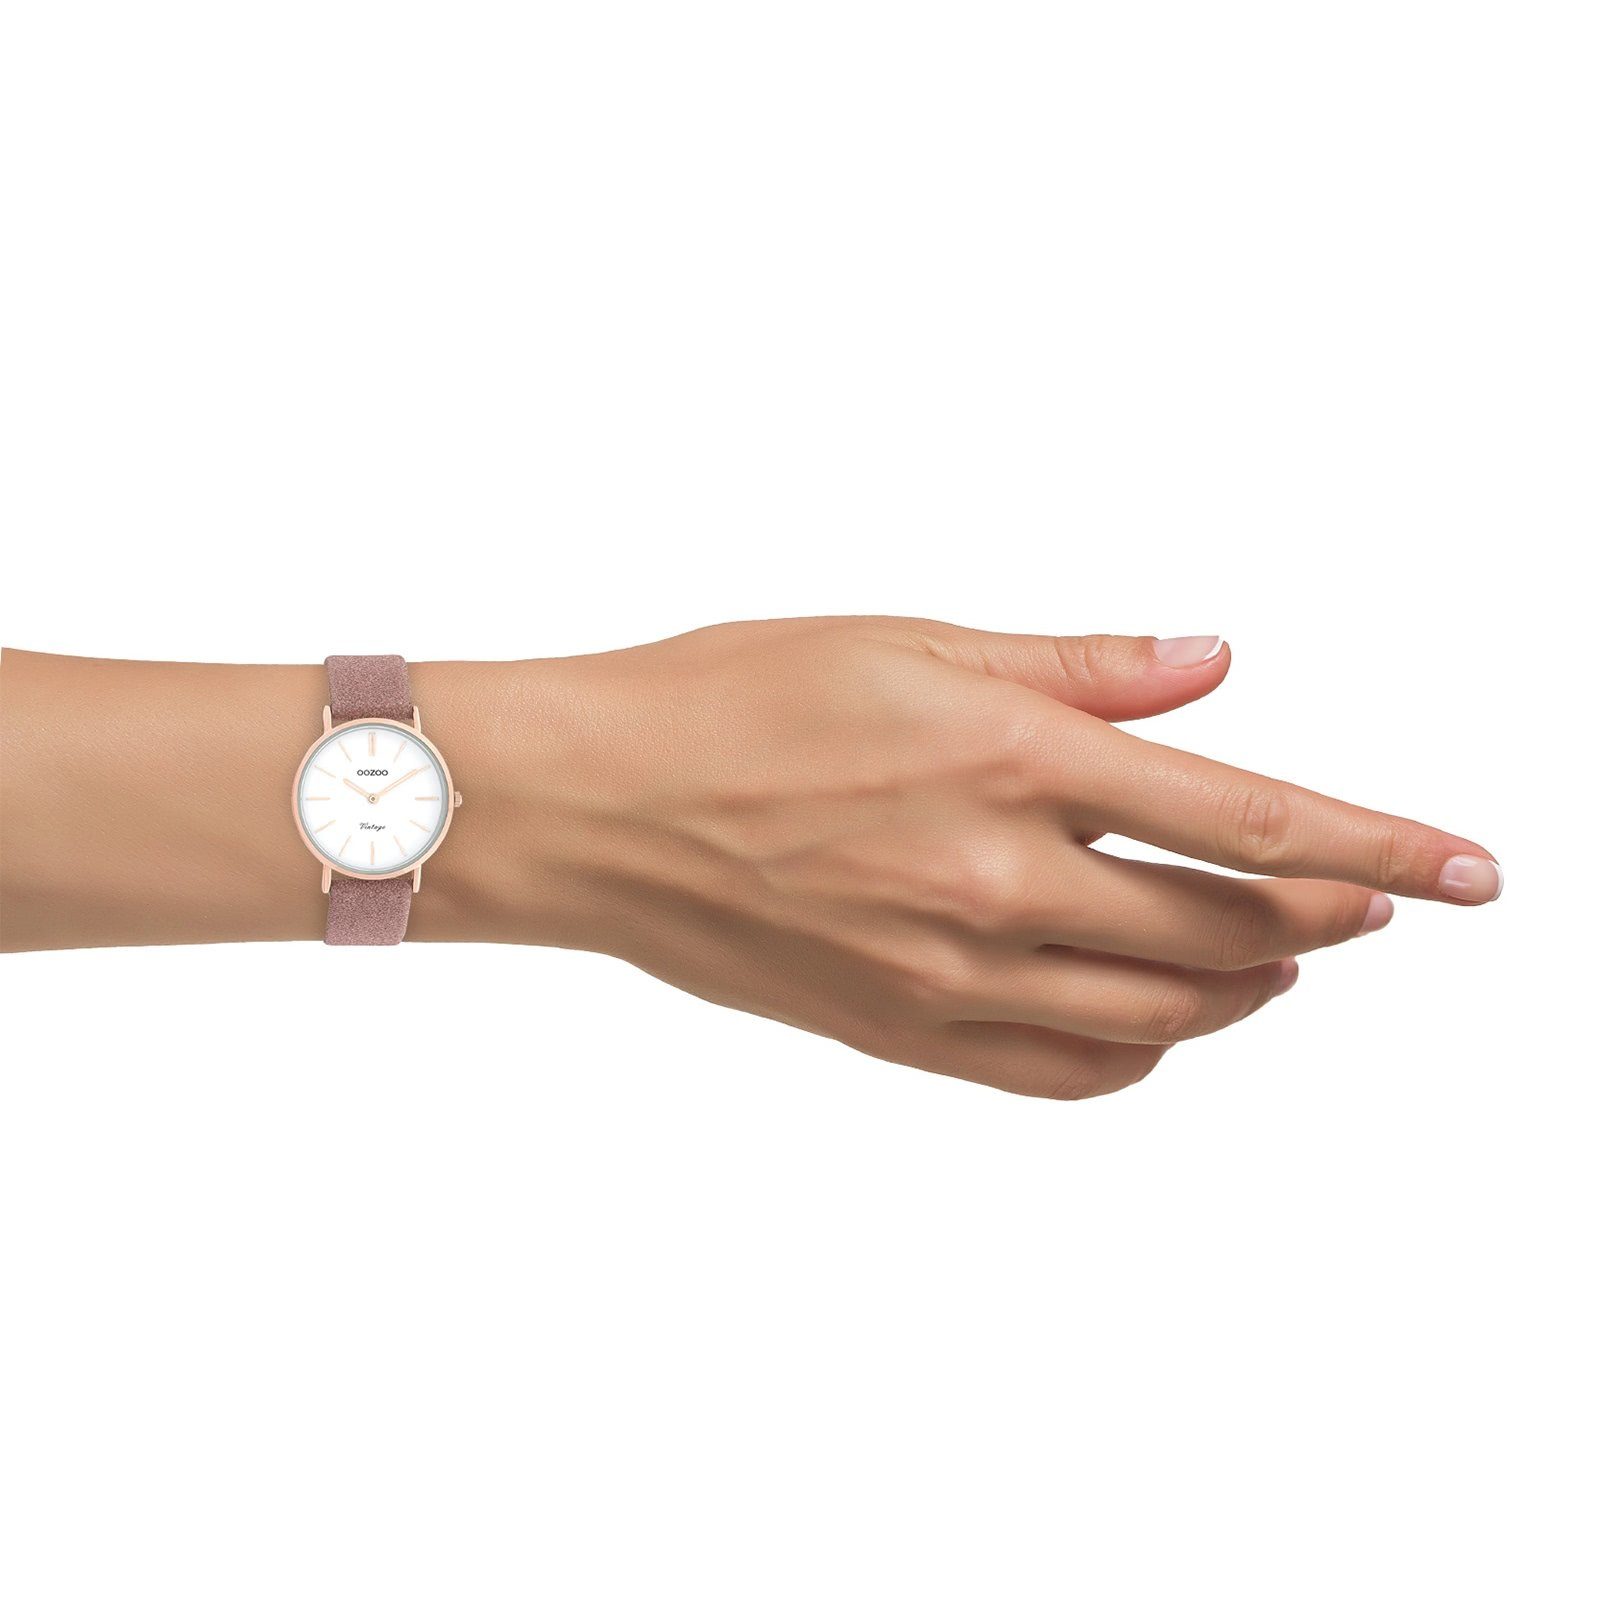 OOZOO Quarzuhr Oozoo rosa Armbanduhr Damen Analog, mittel 32mm) Damenuhr Elegant-Style (ca. rund, Lederarmband